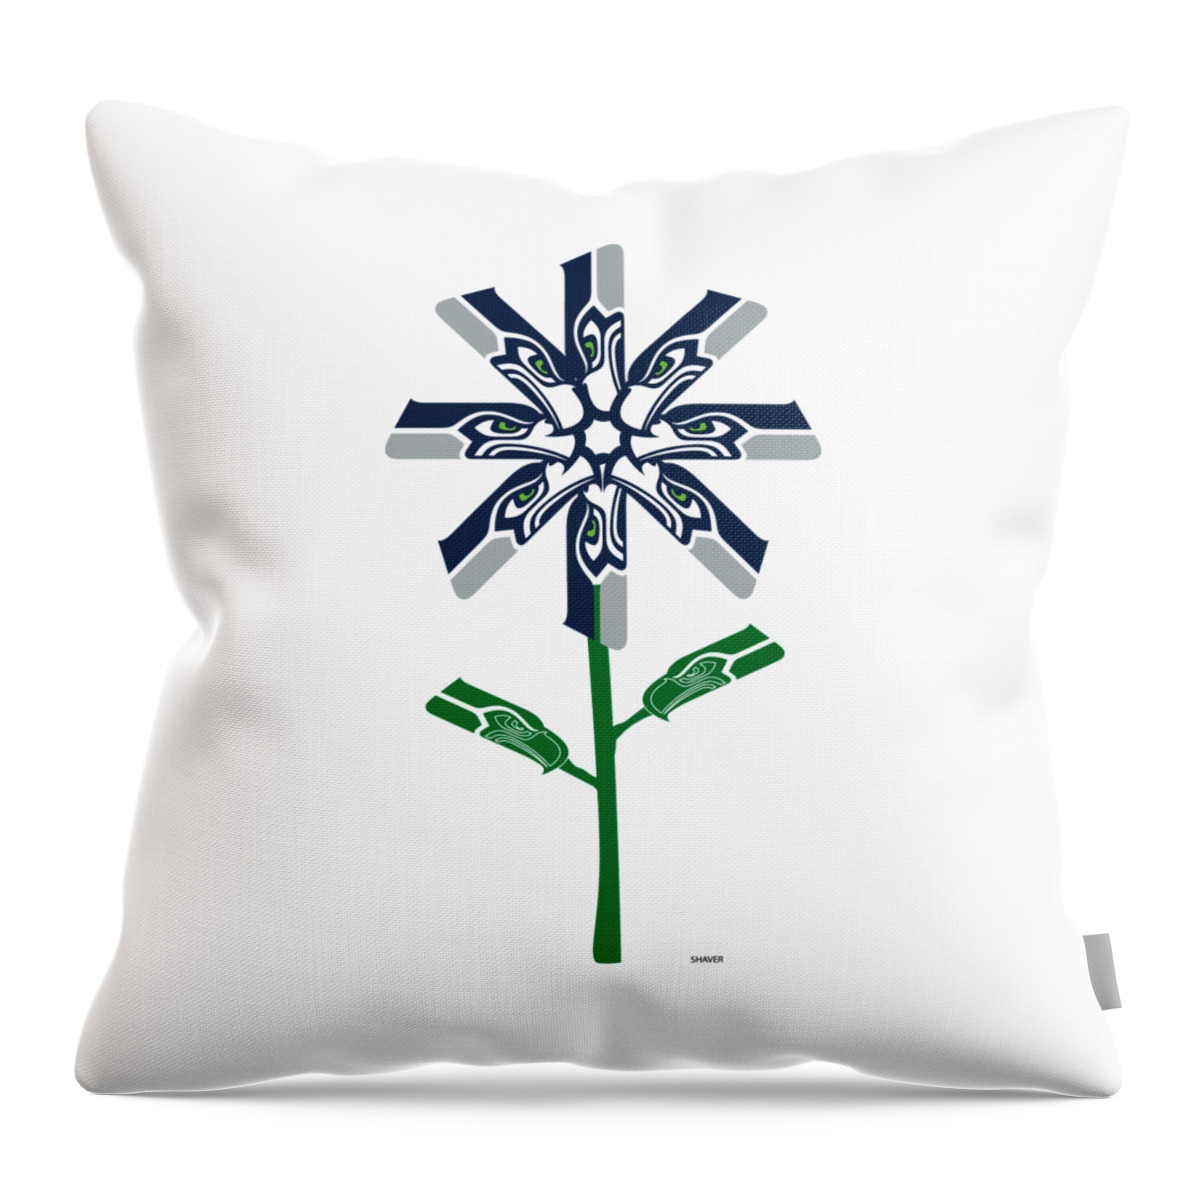 Nfl Throw Pillow featuring the digital art Seattle Seahawks - NFL Football Team Logo Flower Art by Steven Shaver